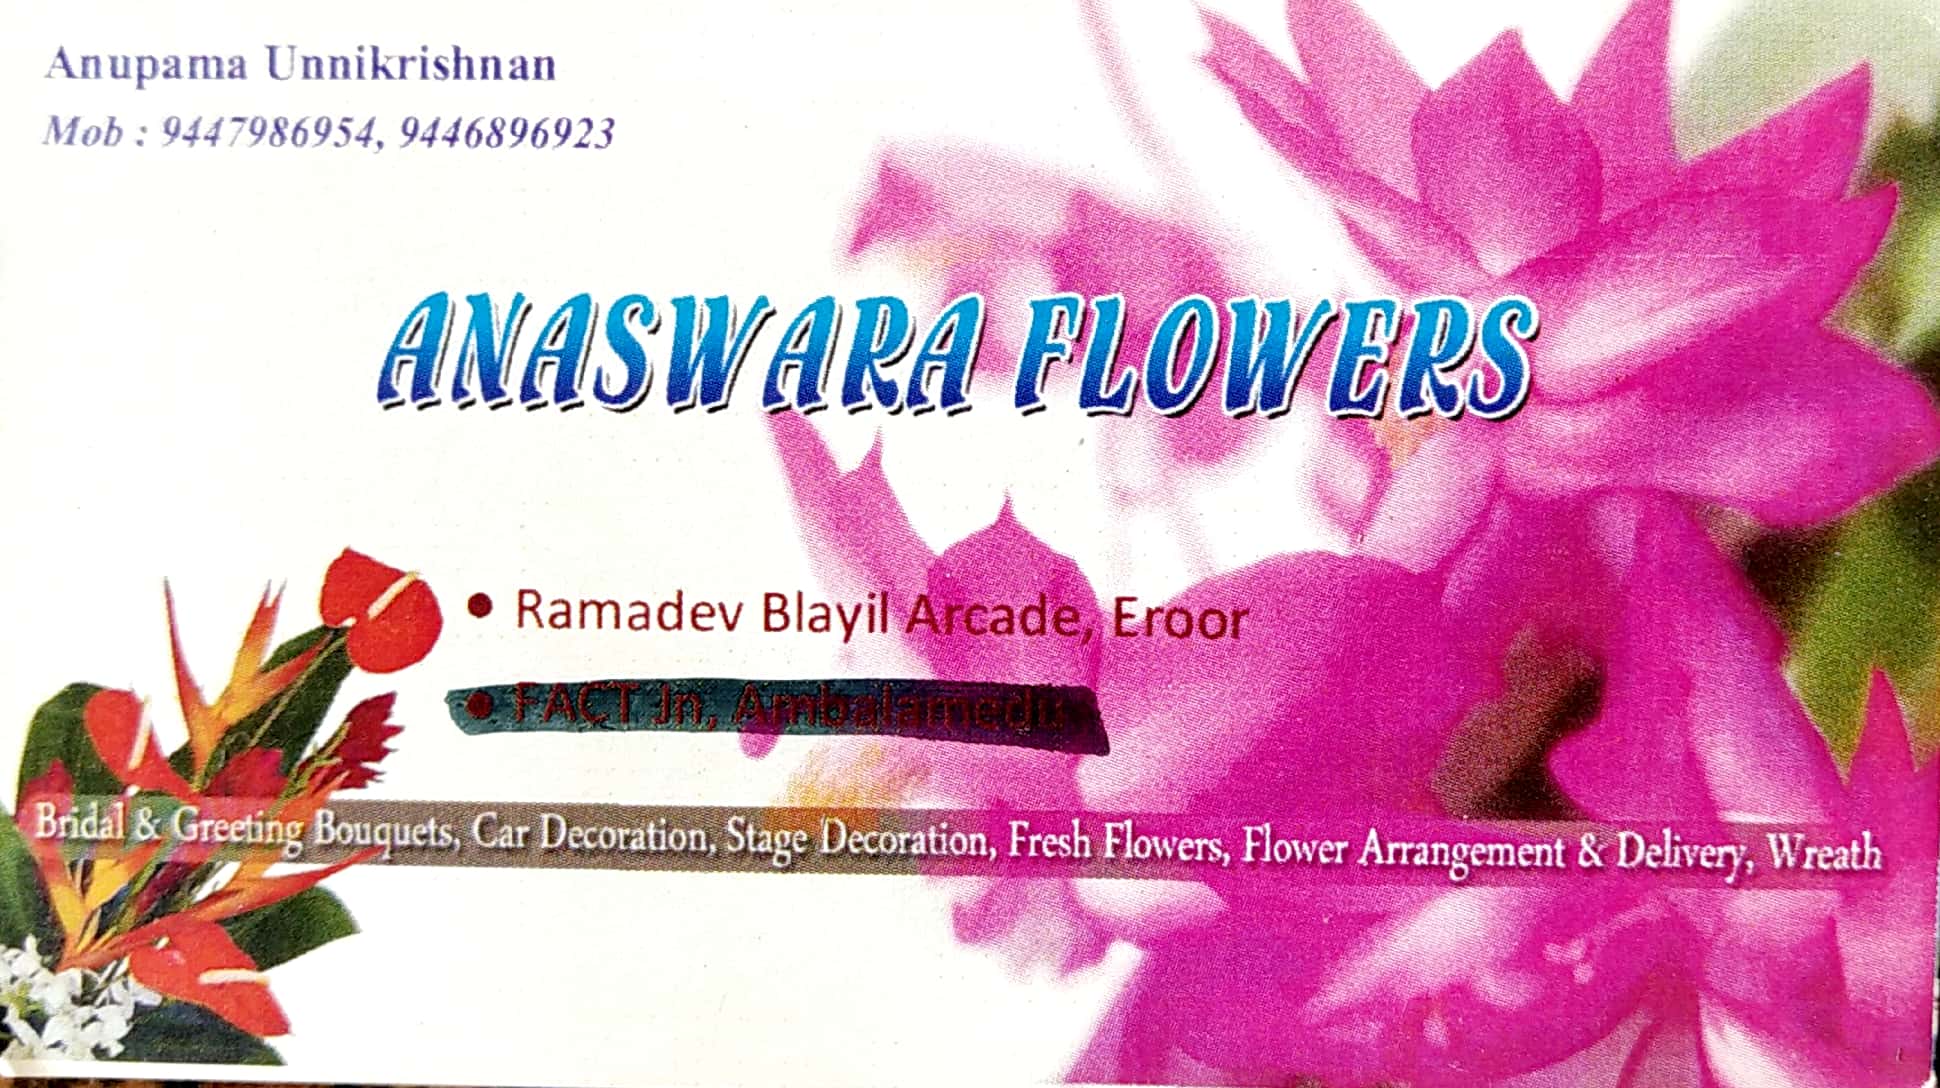 ANASWARA FLOWERS, FLOWERS SHOP,  service in Thrippunithura, Ernakulam